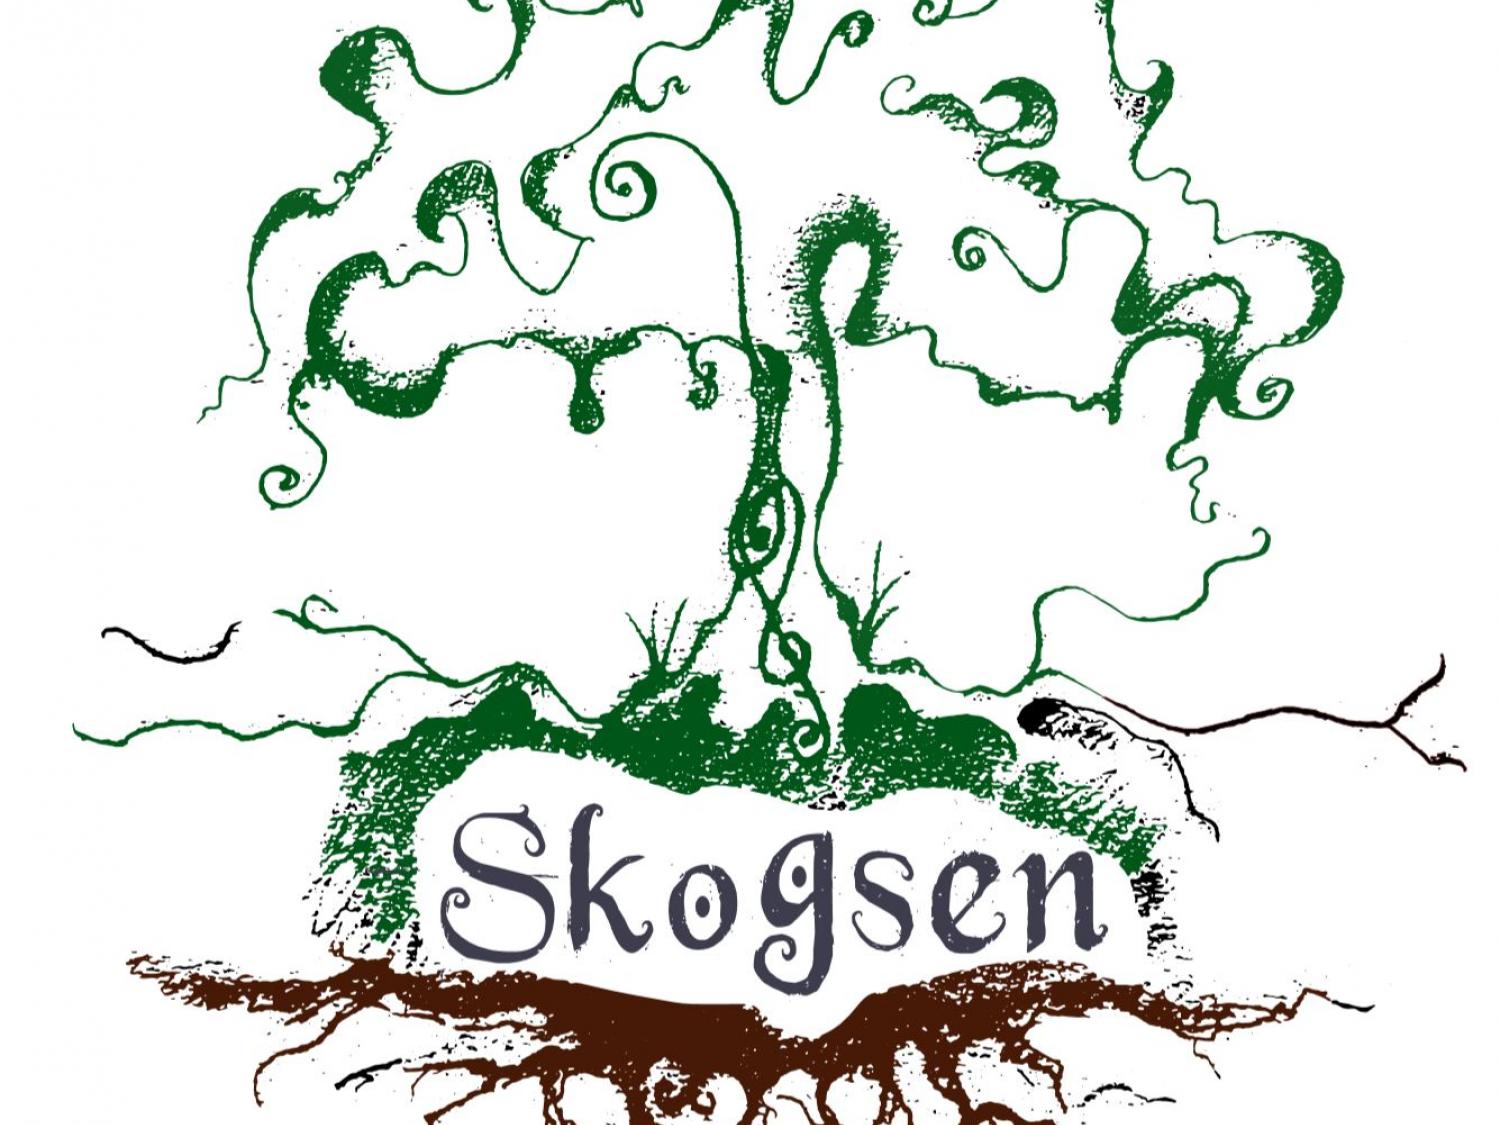 Skogsen's small Circus workshop